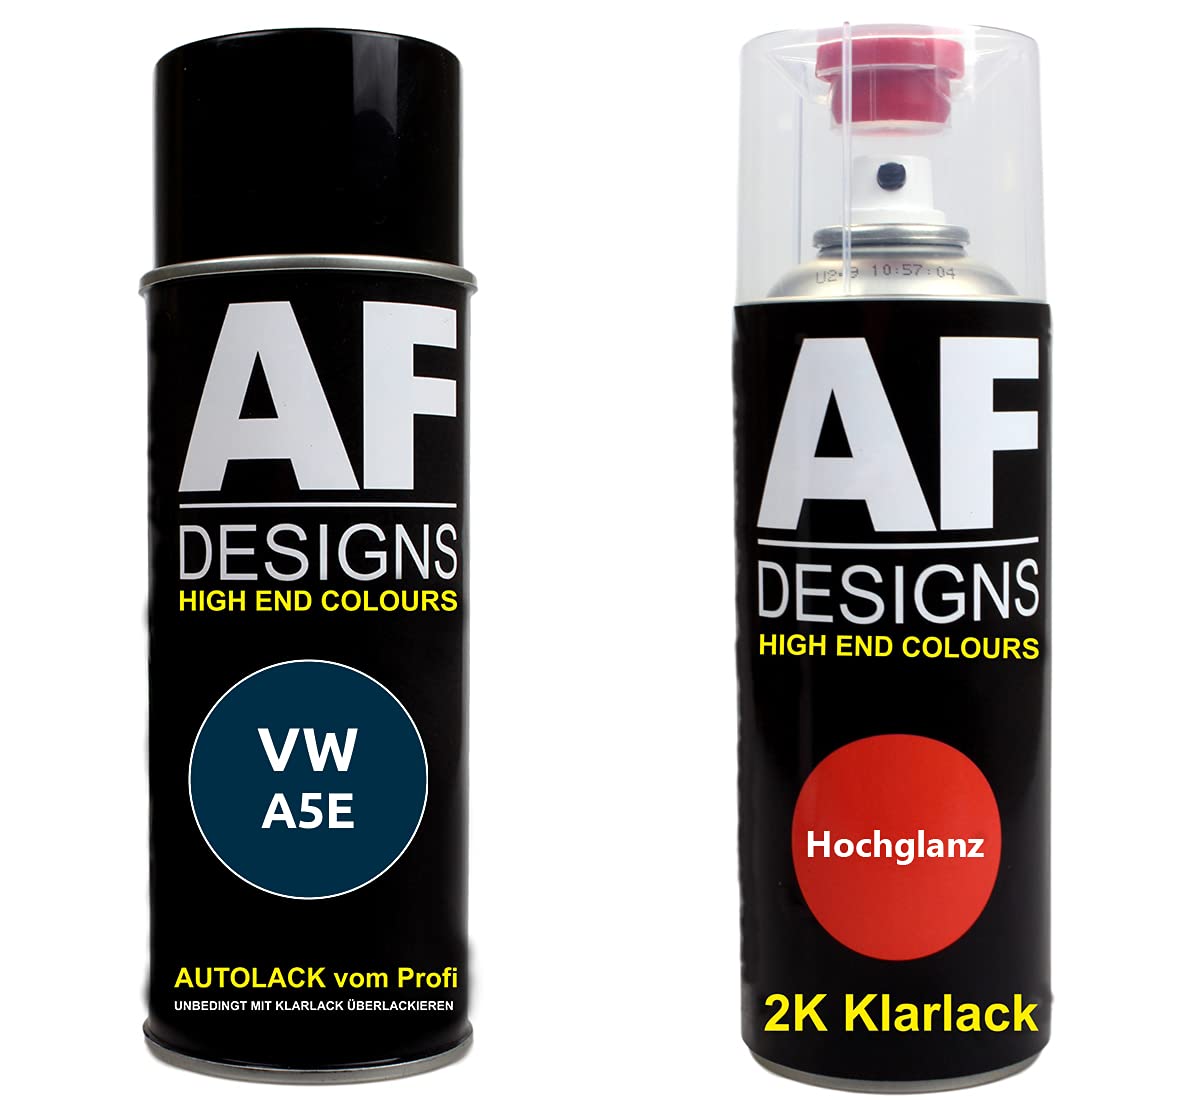 Autolack Spraydose Set für VW A5E Maritimblau 2K Klarlack Basislack Sprühdose Spraydosen 2x400ml von Alex Flittner Designs